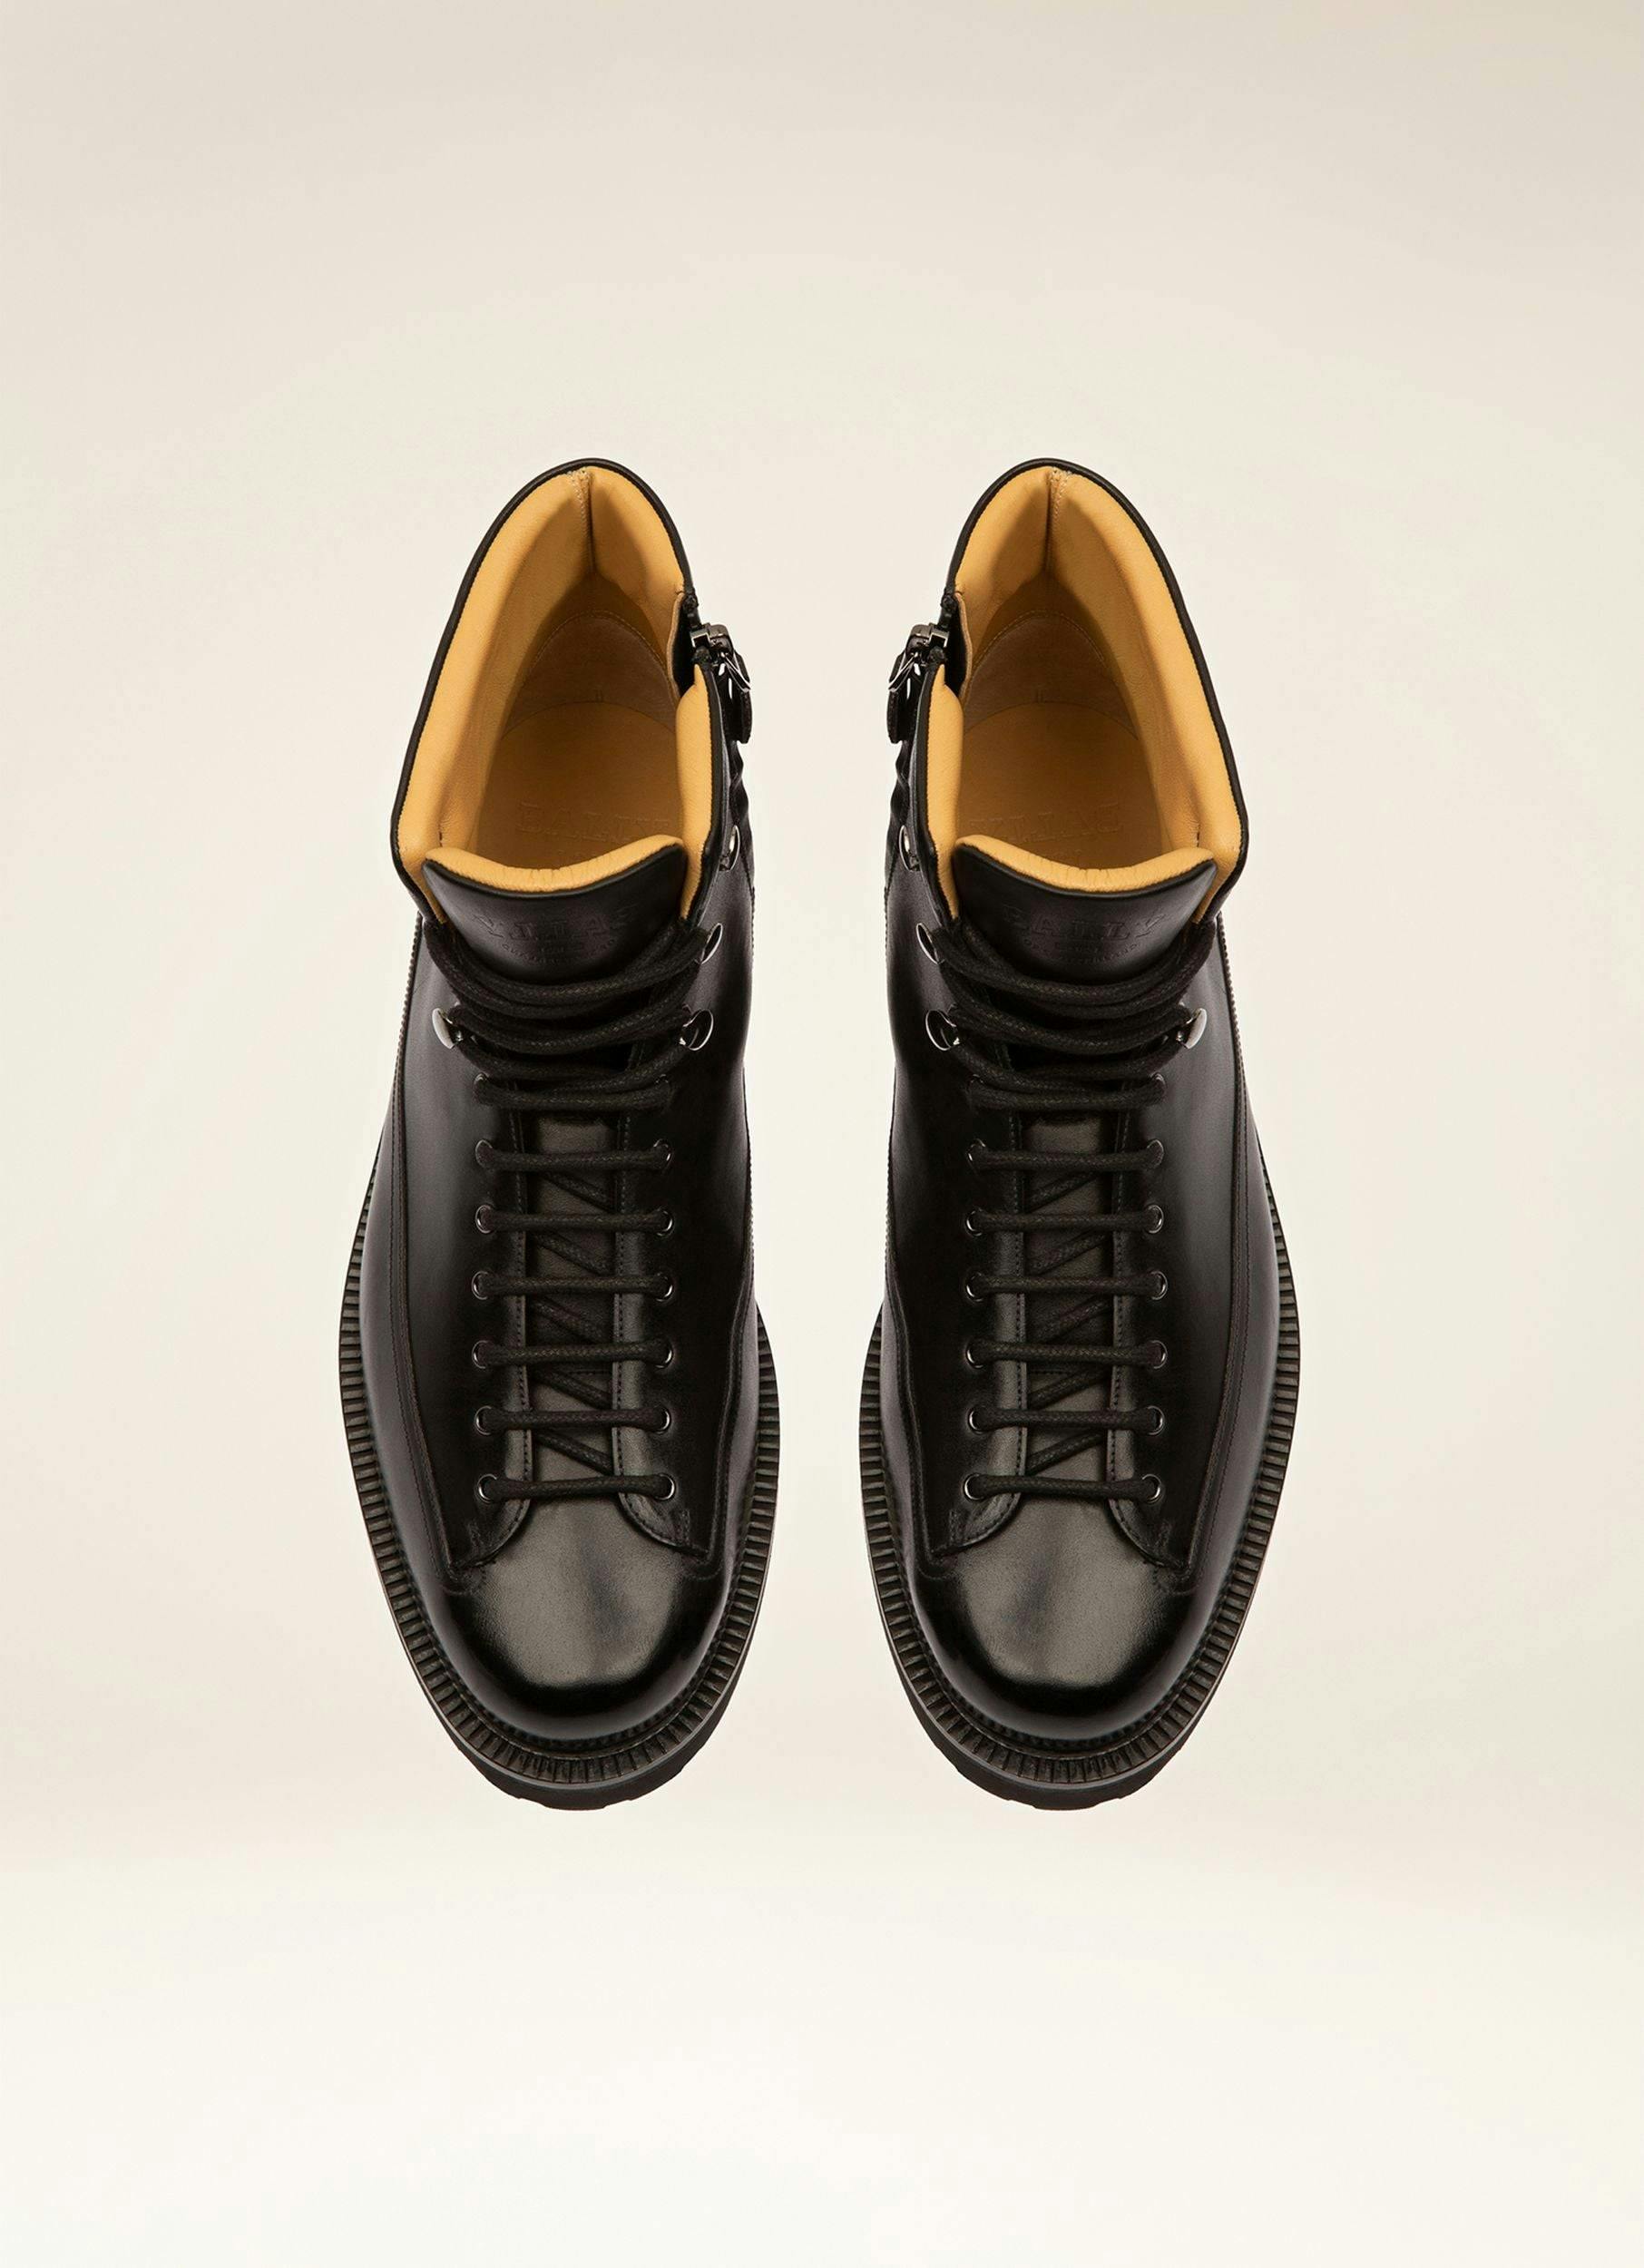 NOTTINGHAM Leather Boots In Black - Men's - Bally - 04